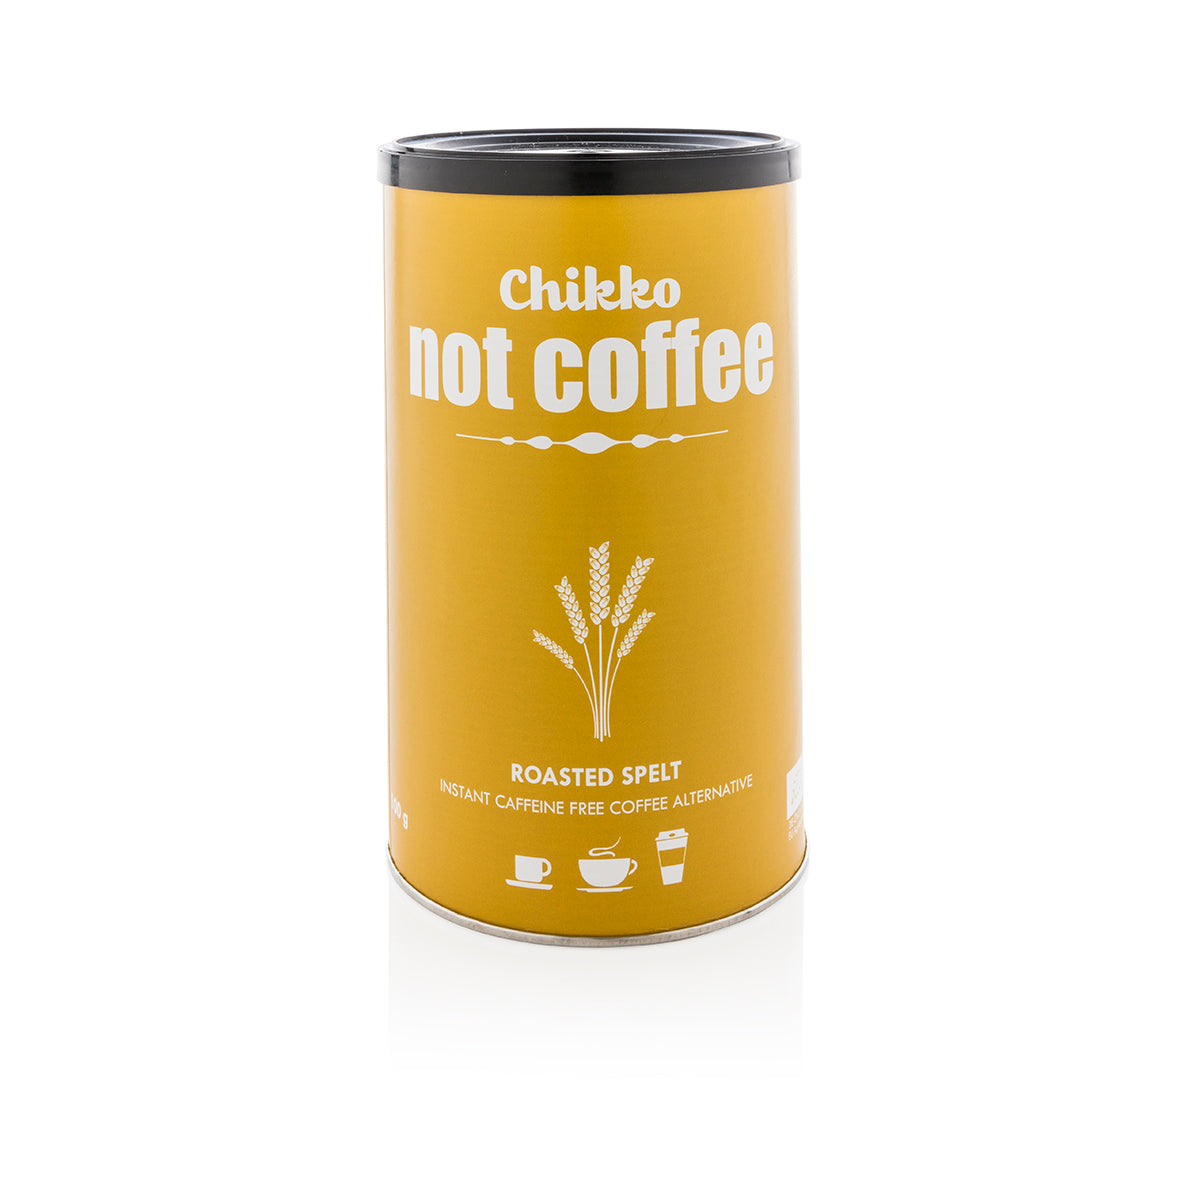 Chikko Not Coffee Spelt 100 grams